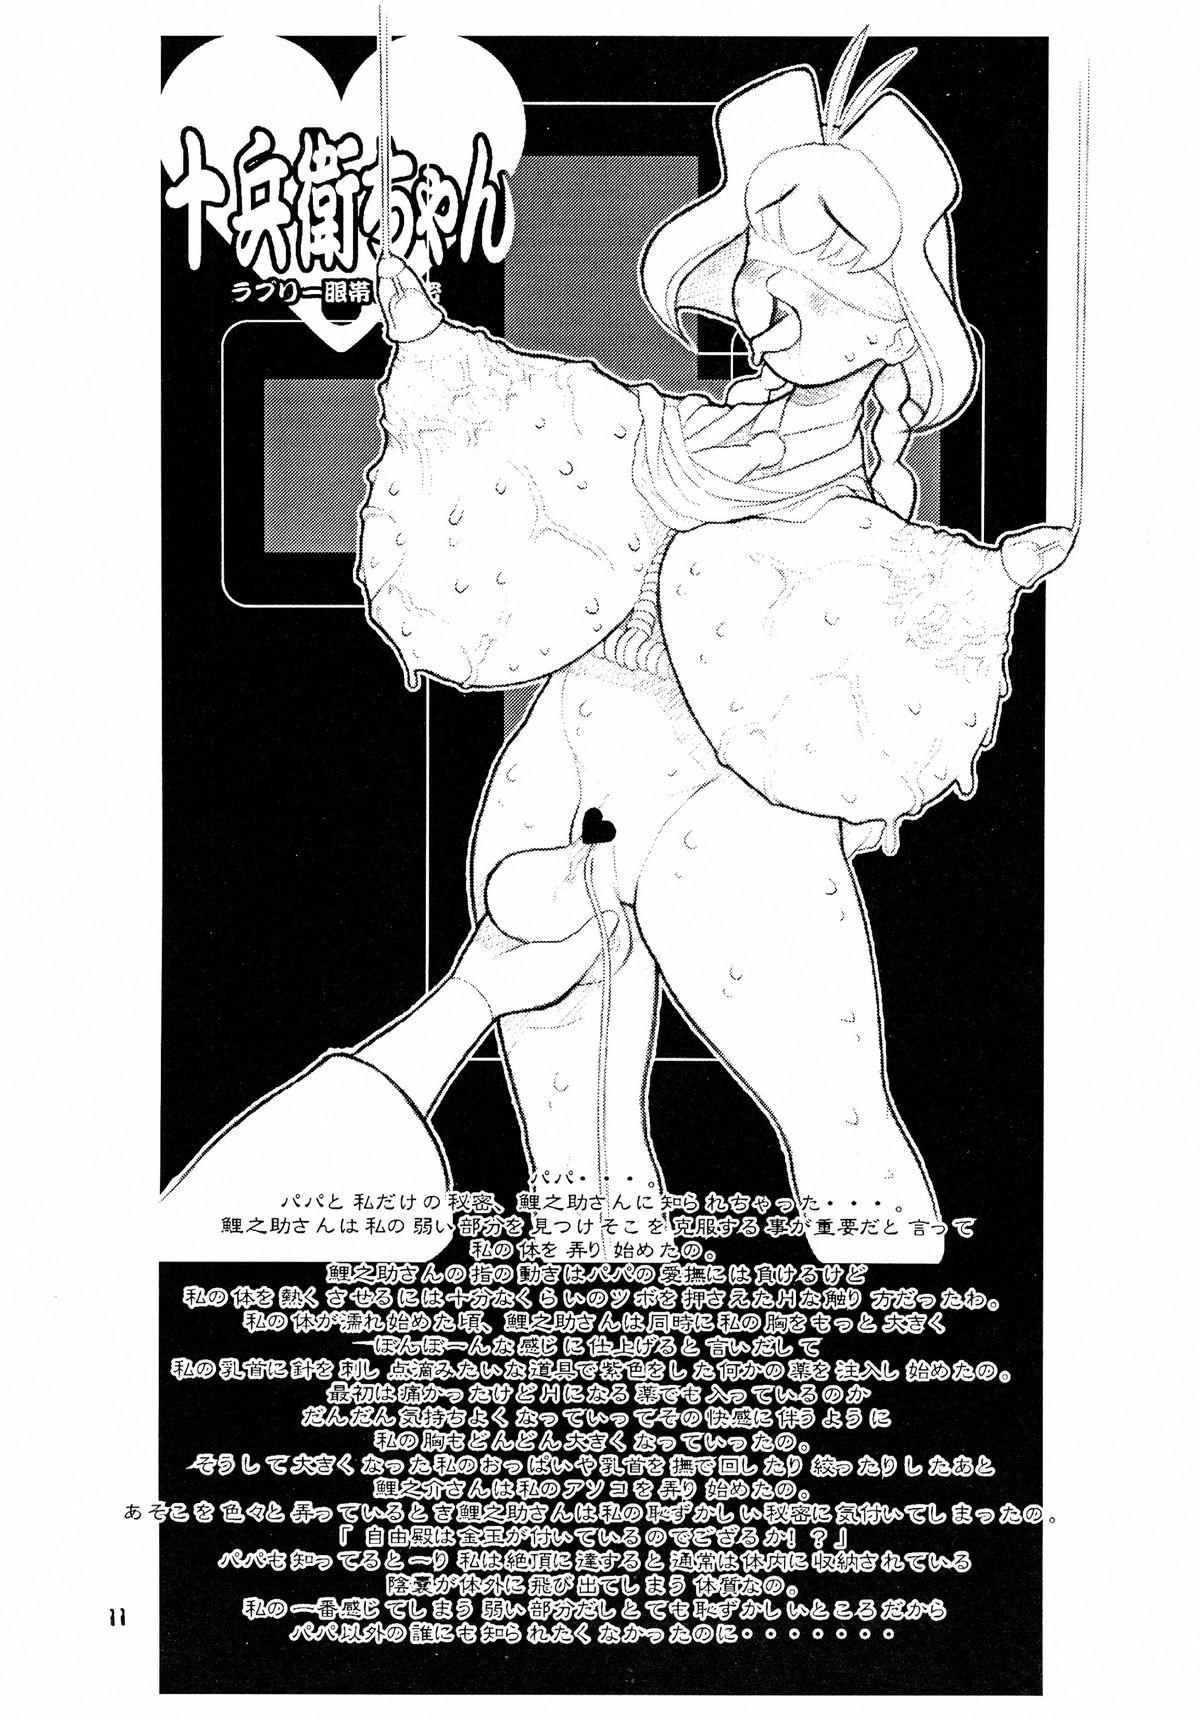 Forwomen MaD ArtistS ZyuubeityanN - Jubei chan Gorgeous - Page 11